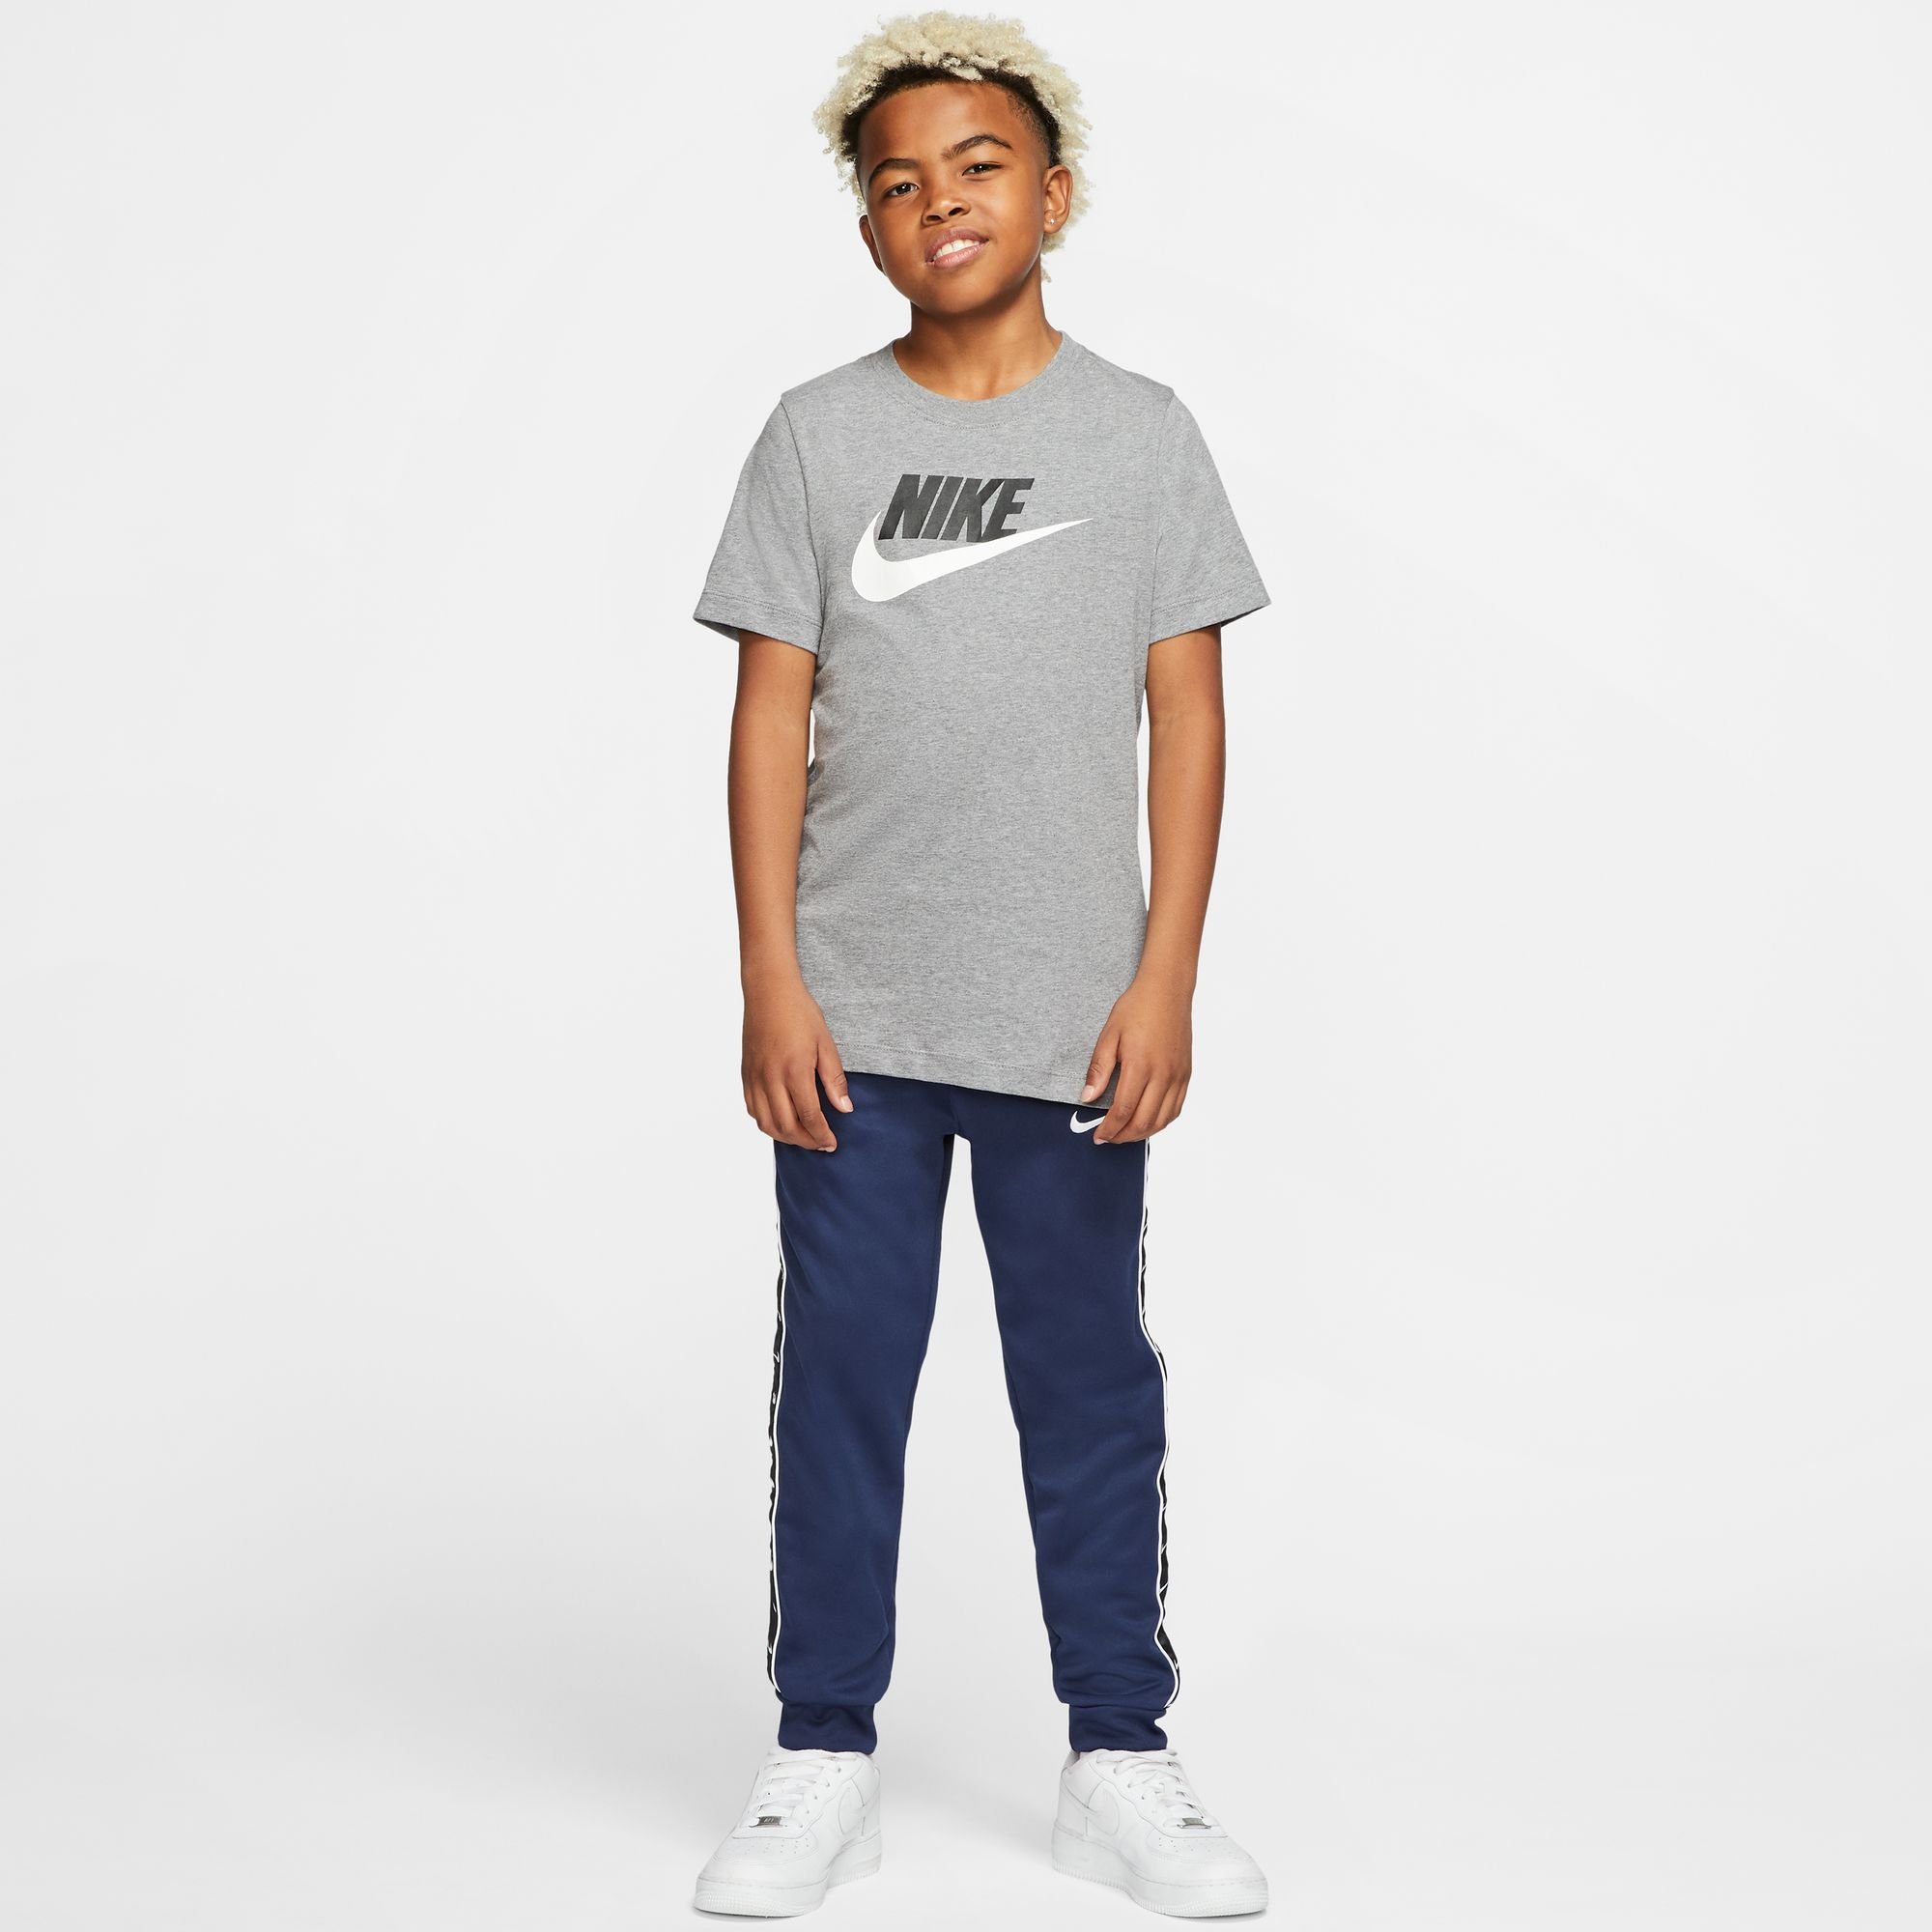 Nike Sportswear KIDS' grau-meliert T-SHIRT BIG COTTON T-Shirt